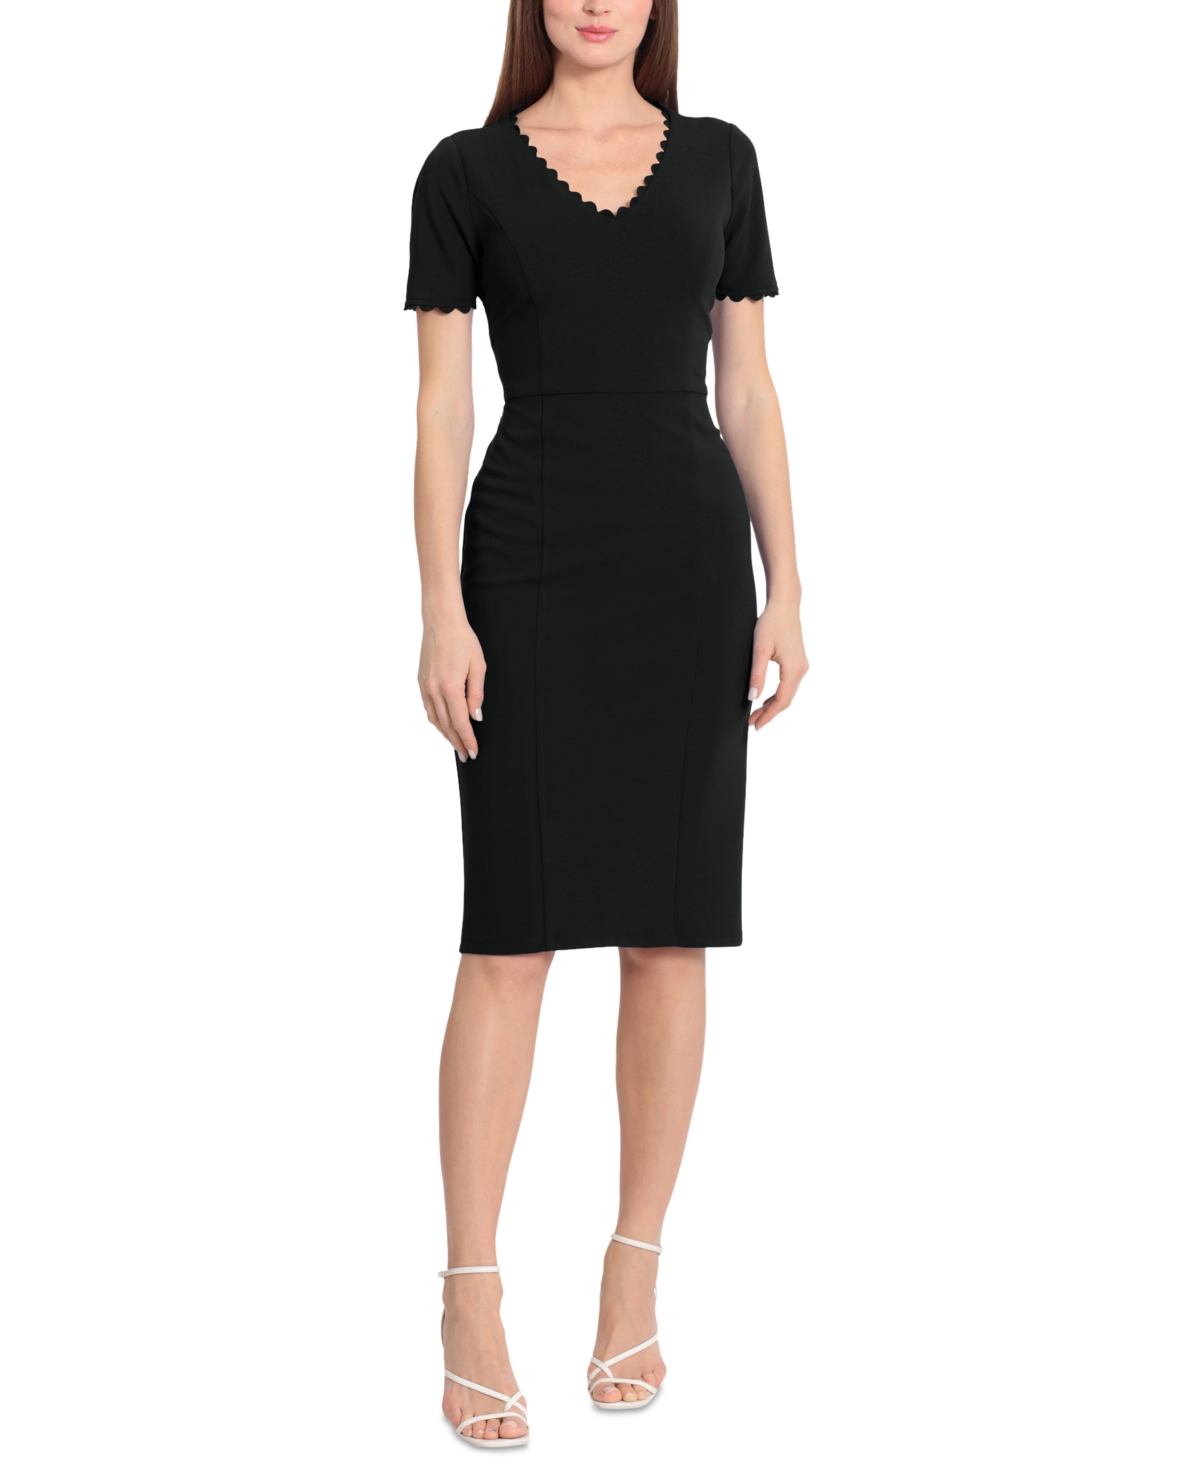 Women's Short-Sleeve Sheath Dress - Black